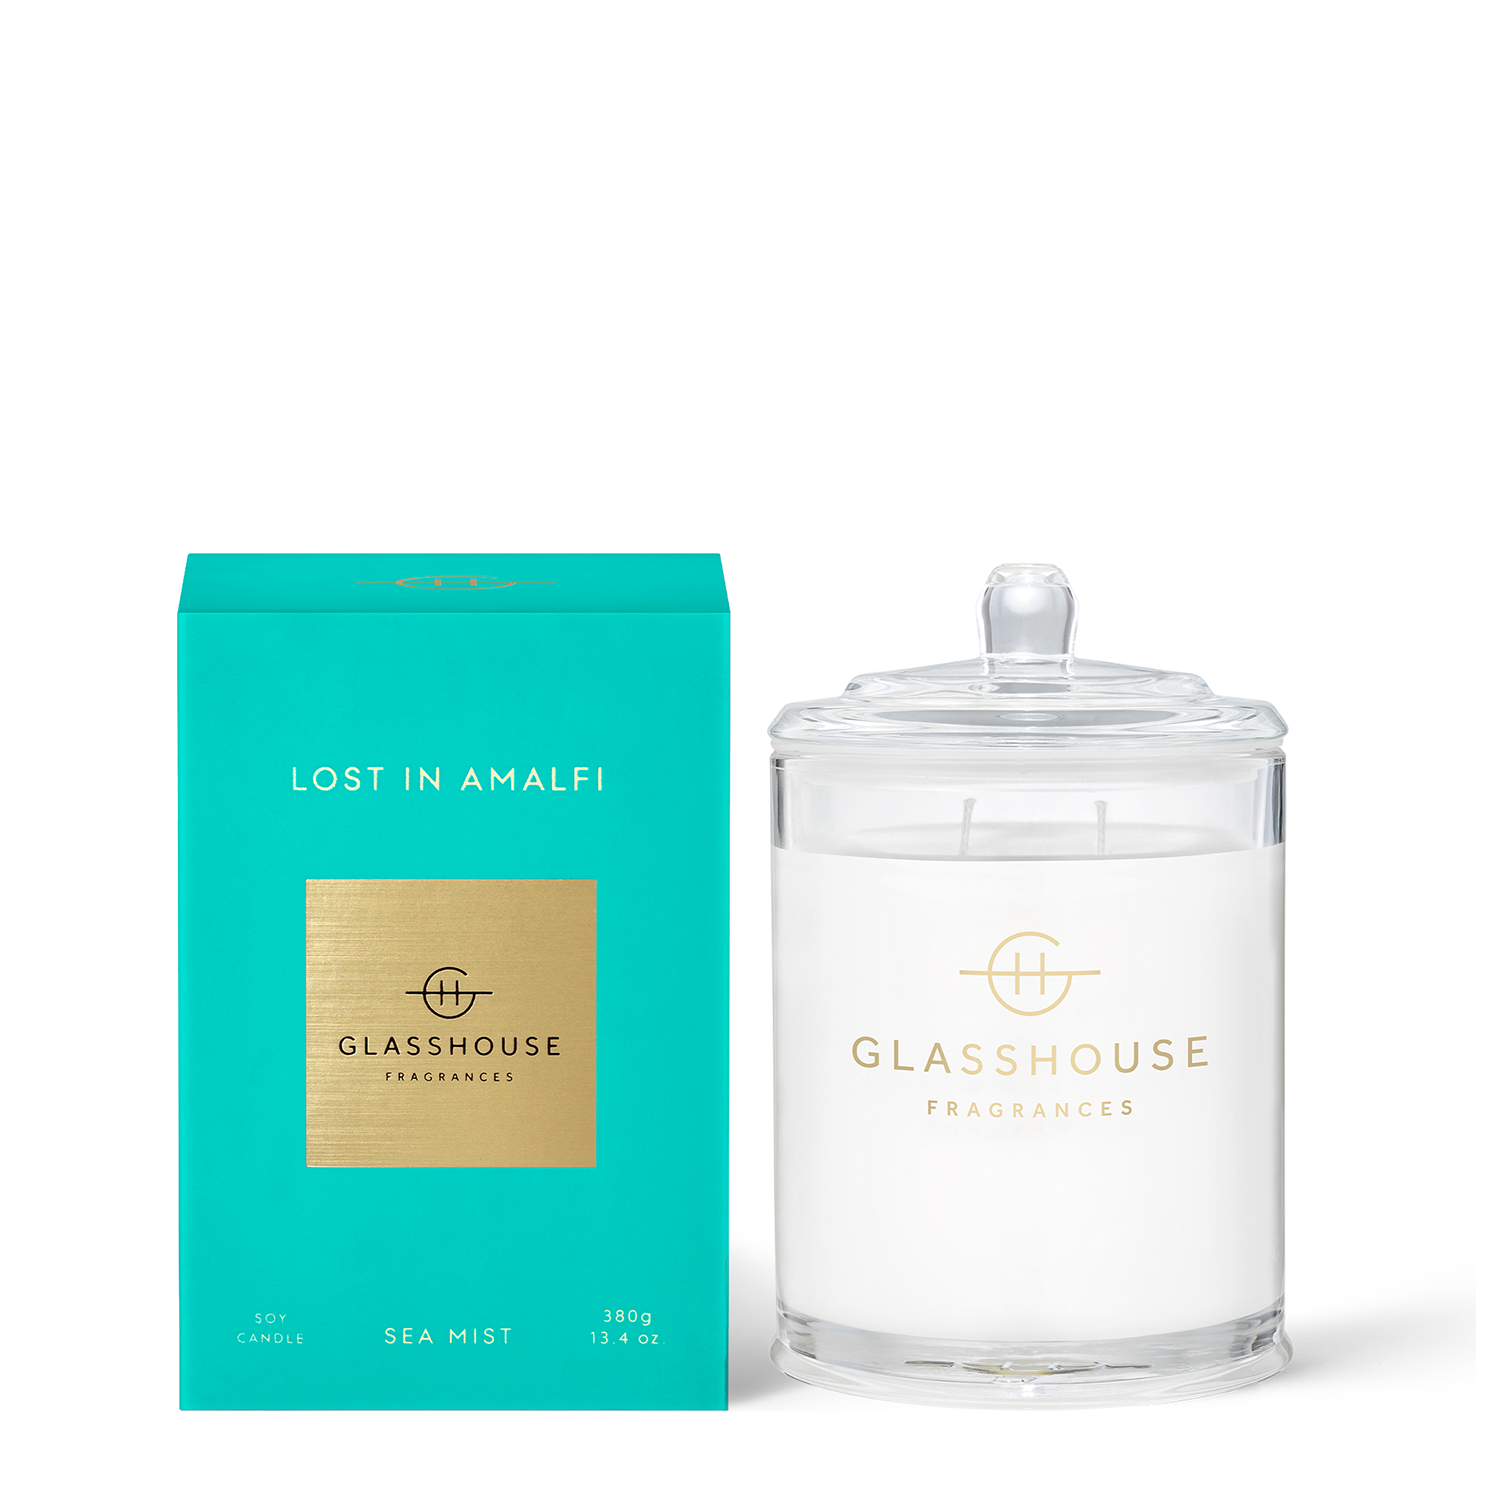 Glasshouse Fragrances - Lost in Amalfi Candle / 13 oz